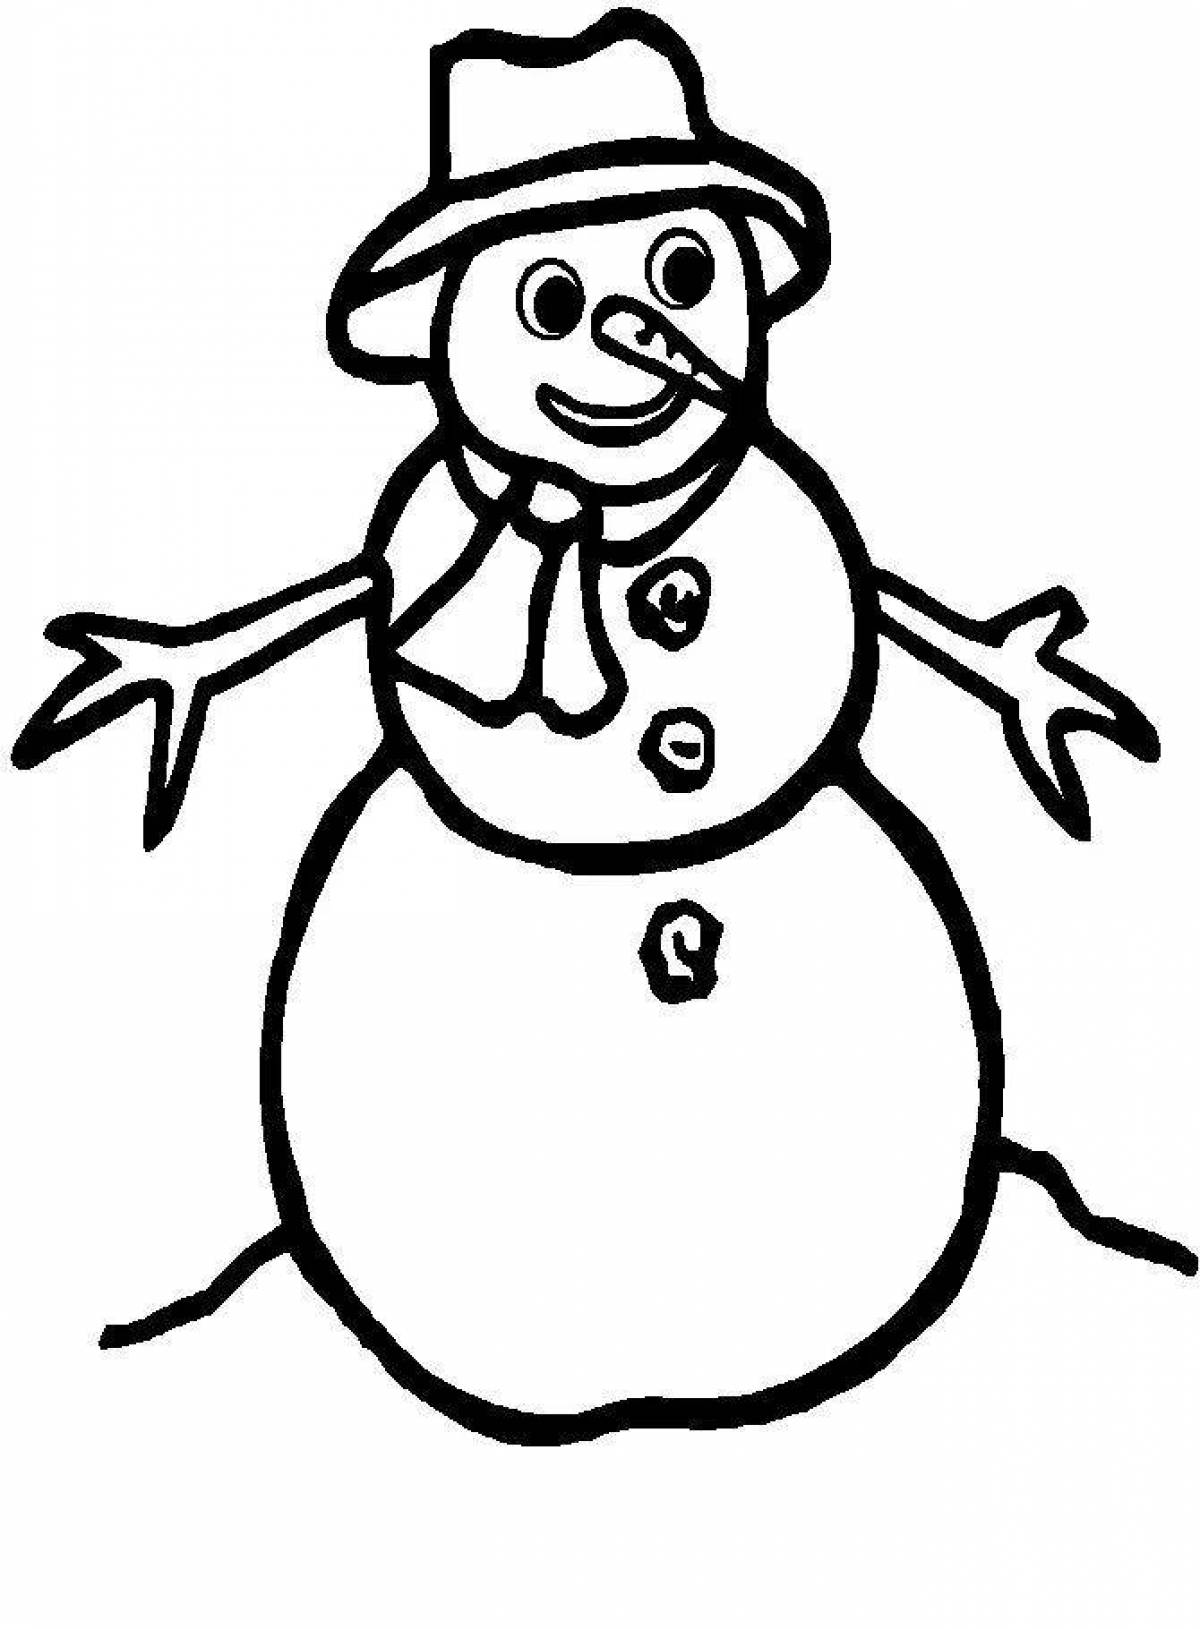 Snowman #8